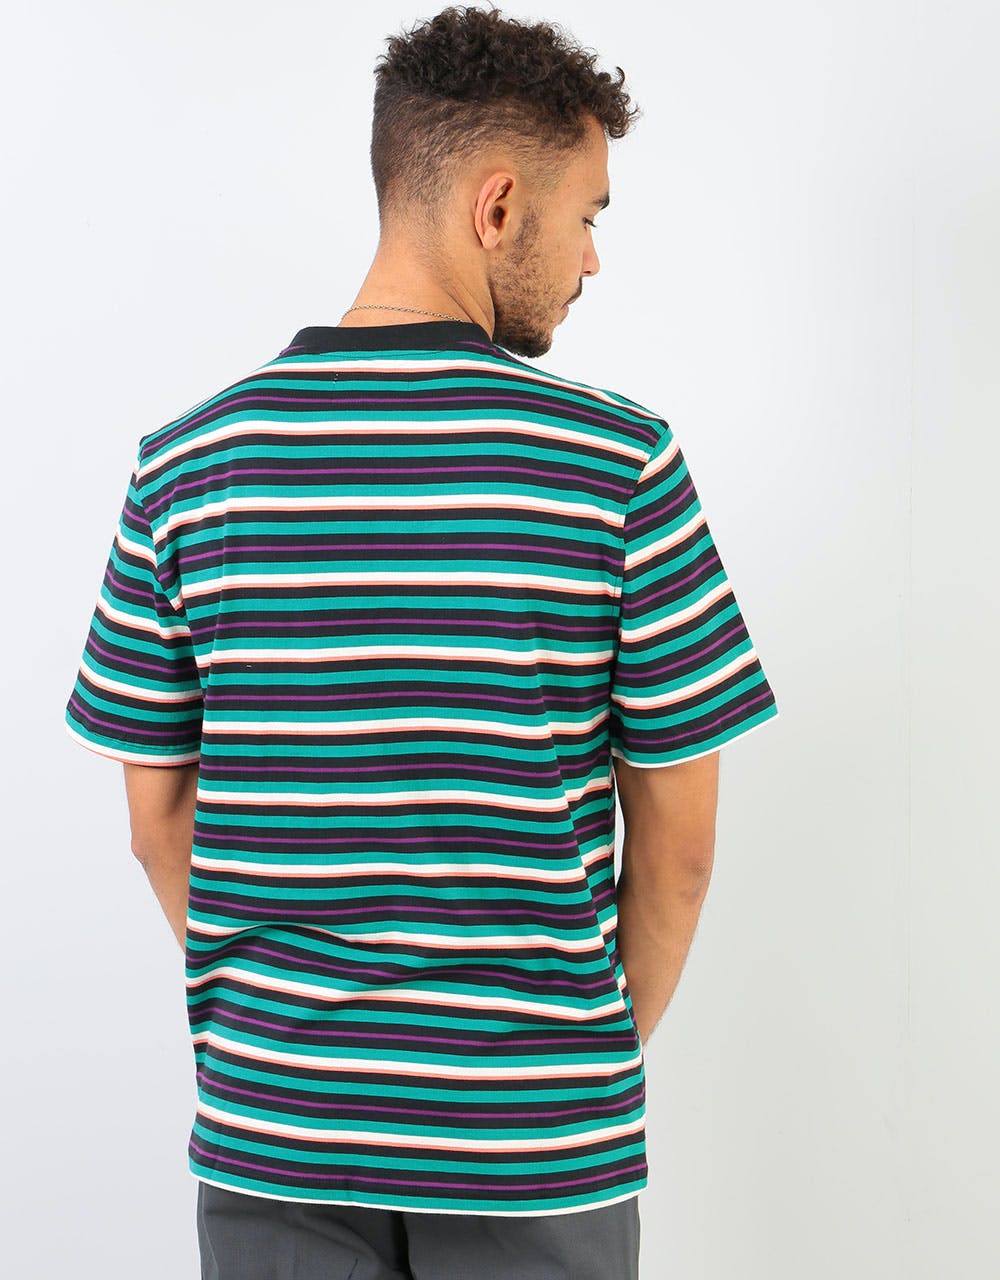 Welcome Surf Stripe S/S Knit T-Shirt - Teal/Black/Bone